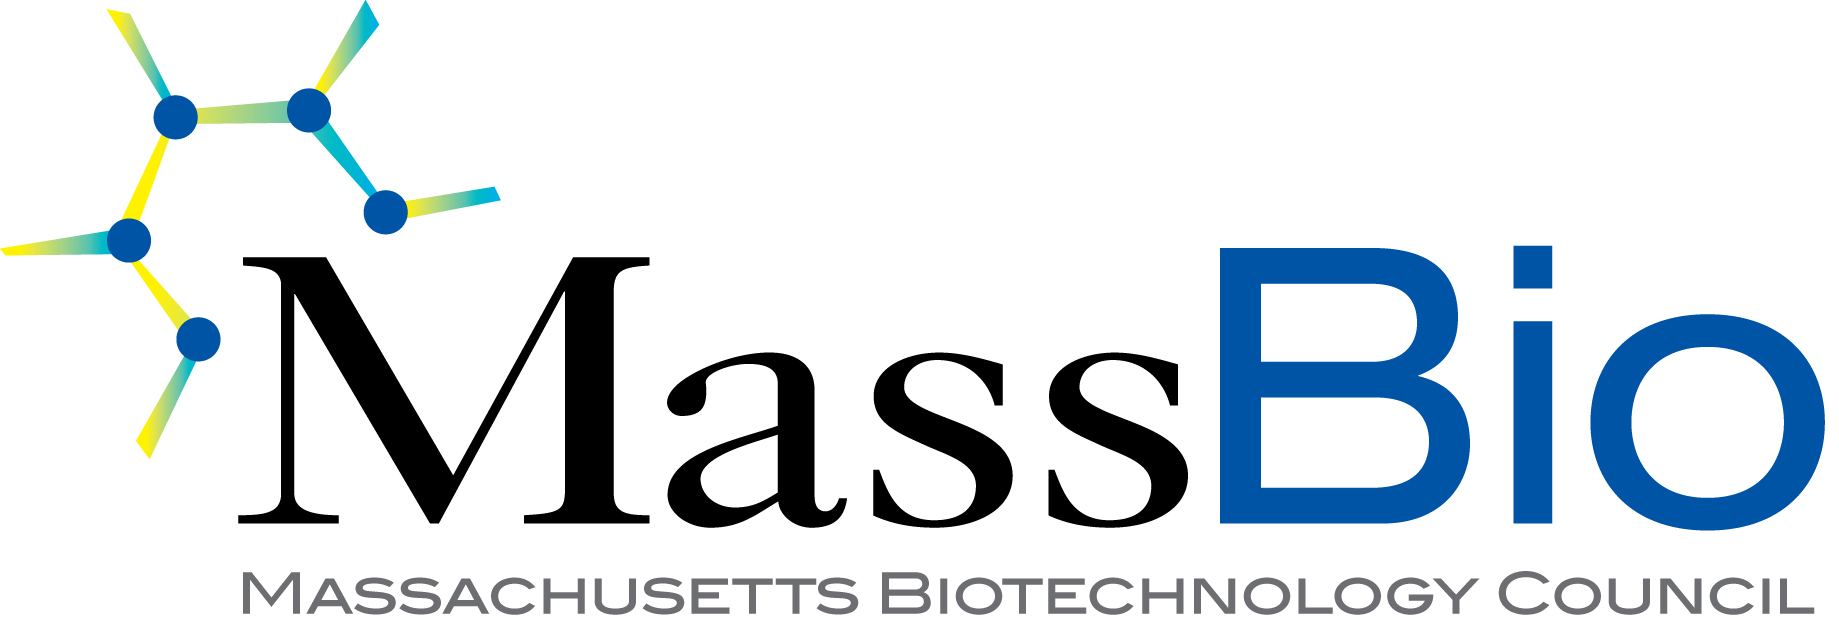 MassBio_Logo_2011.jpg